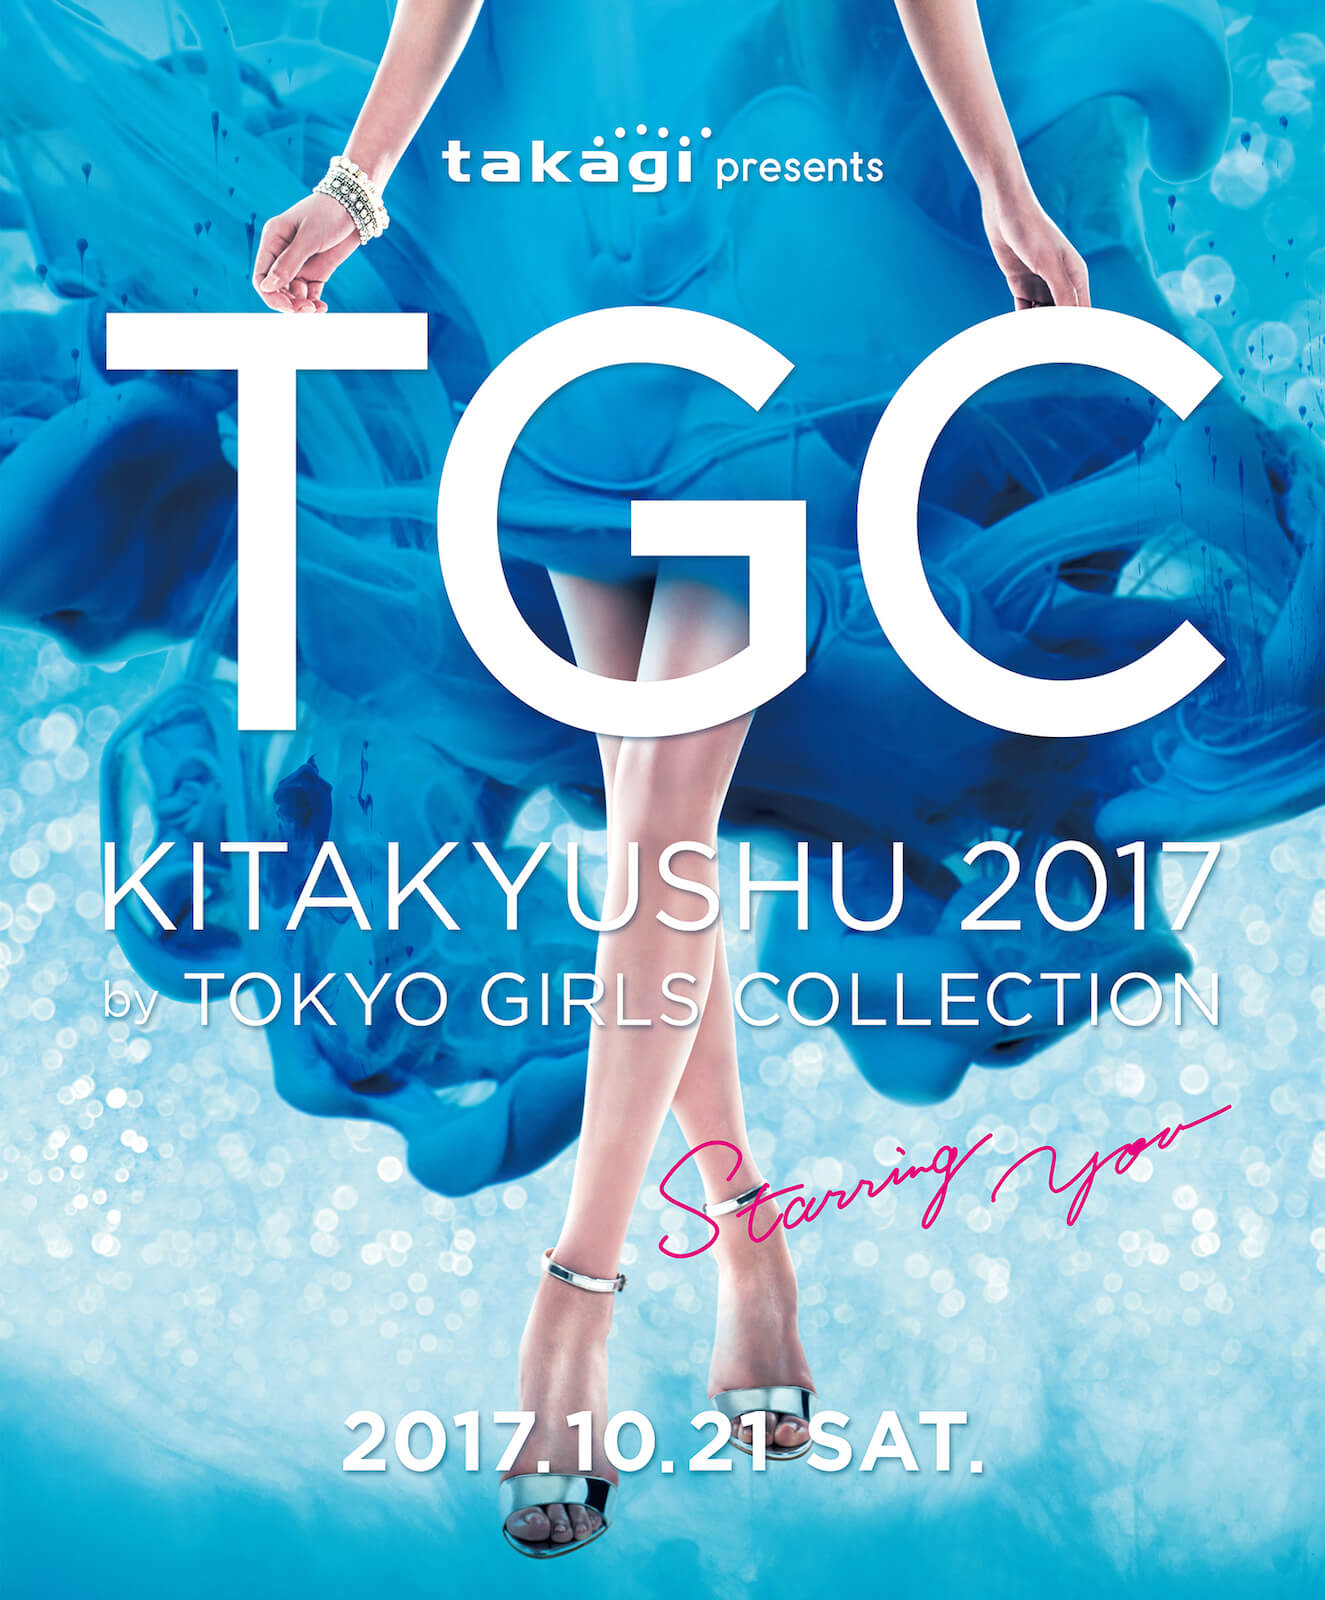 「takagi presents TGC KITAKYUSHU 2017 by TOKYO GIRLS COLLECTION」キービジュアル